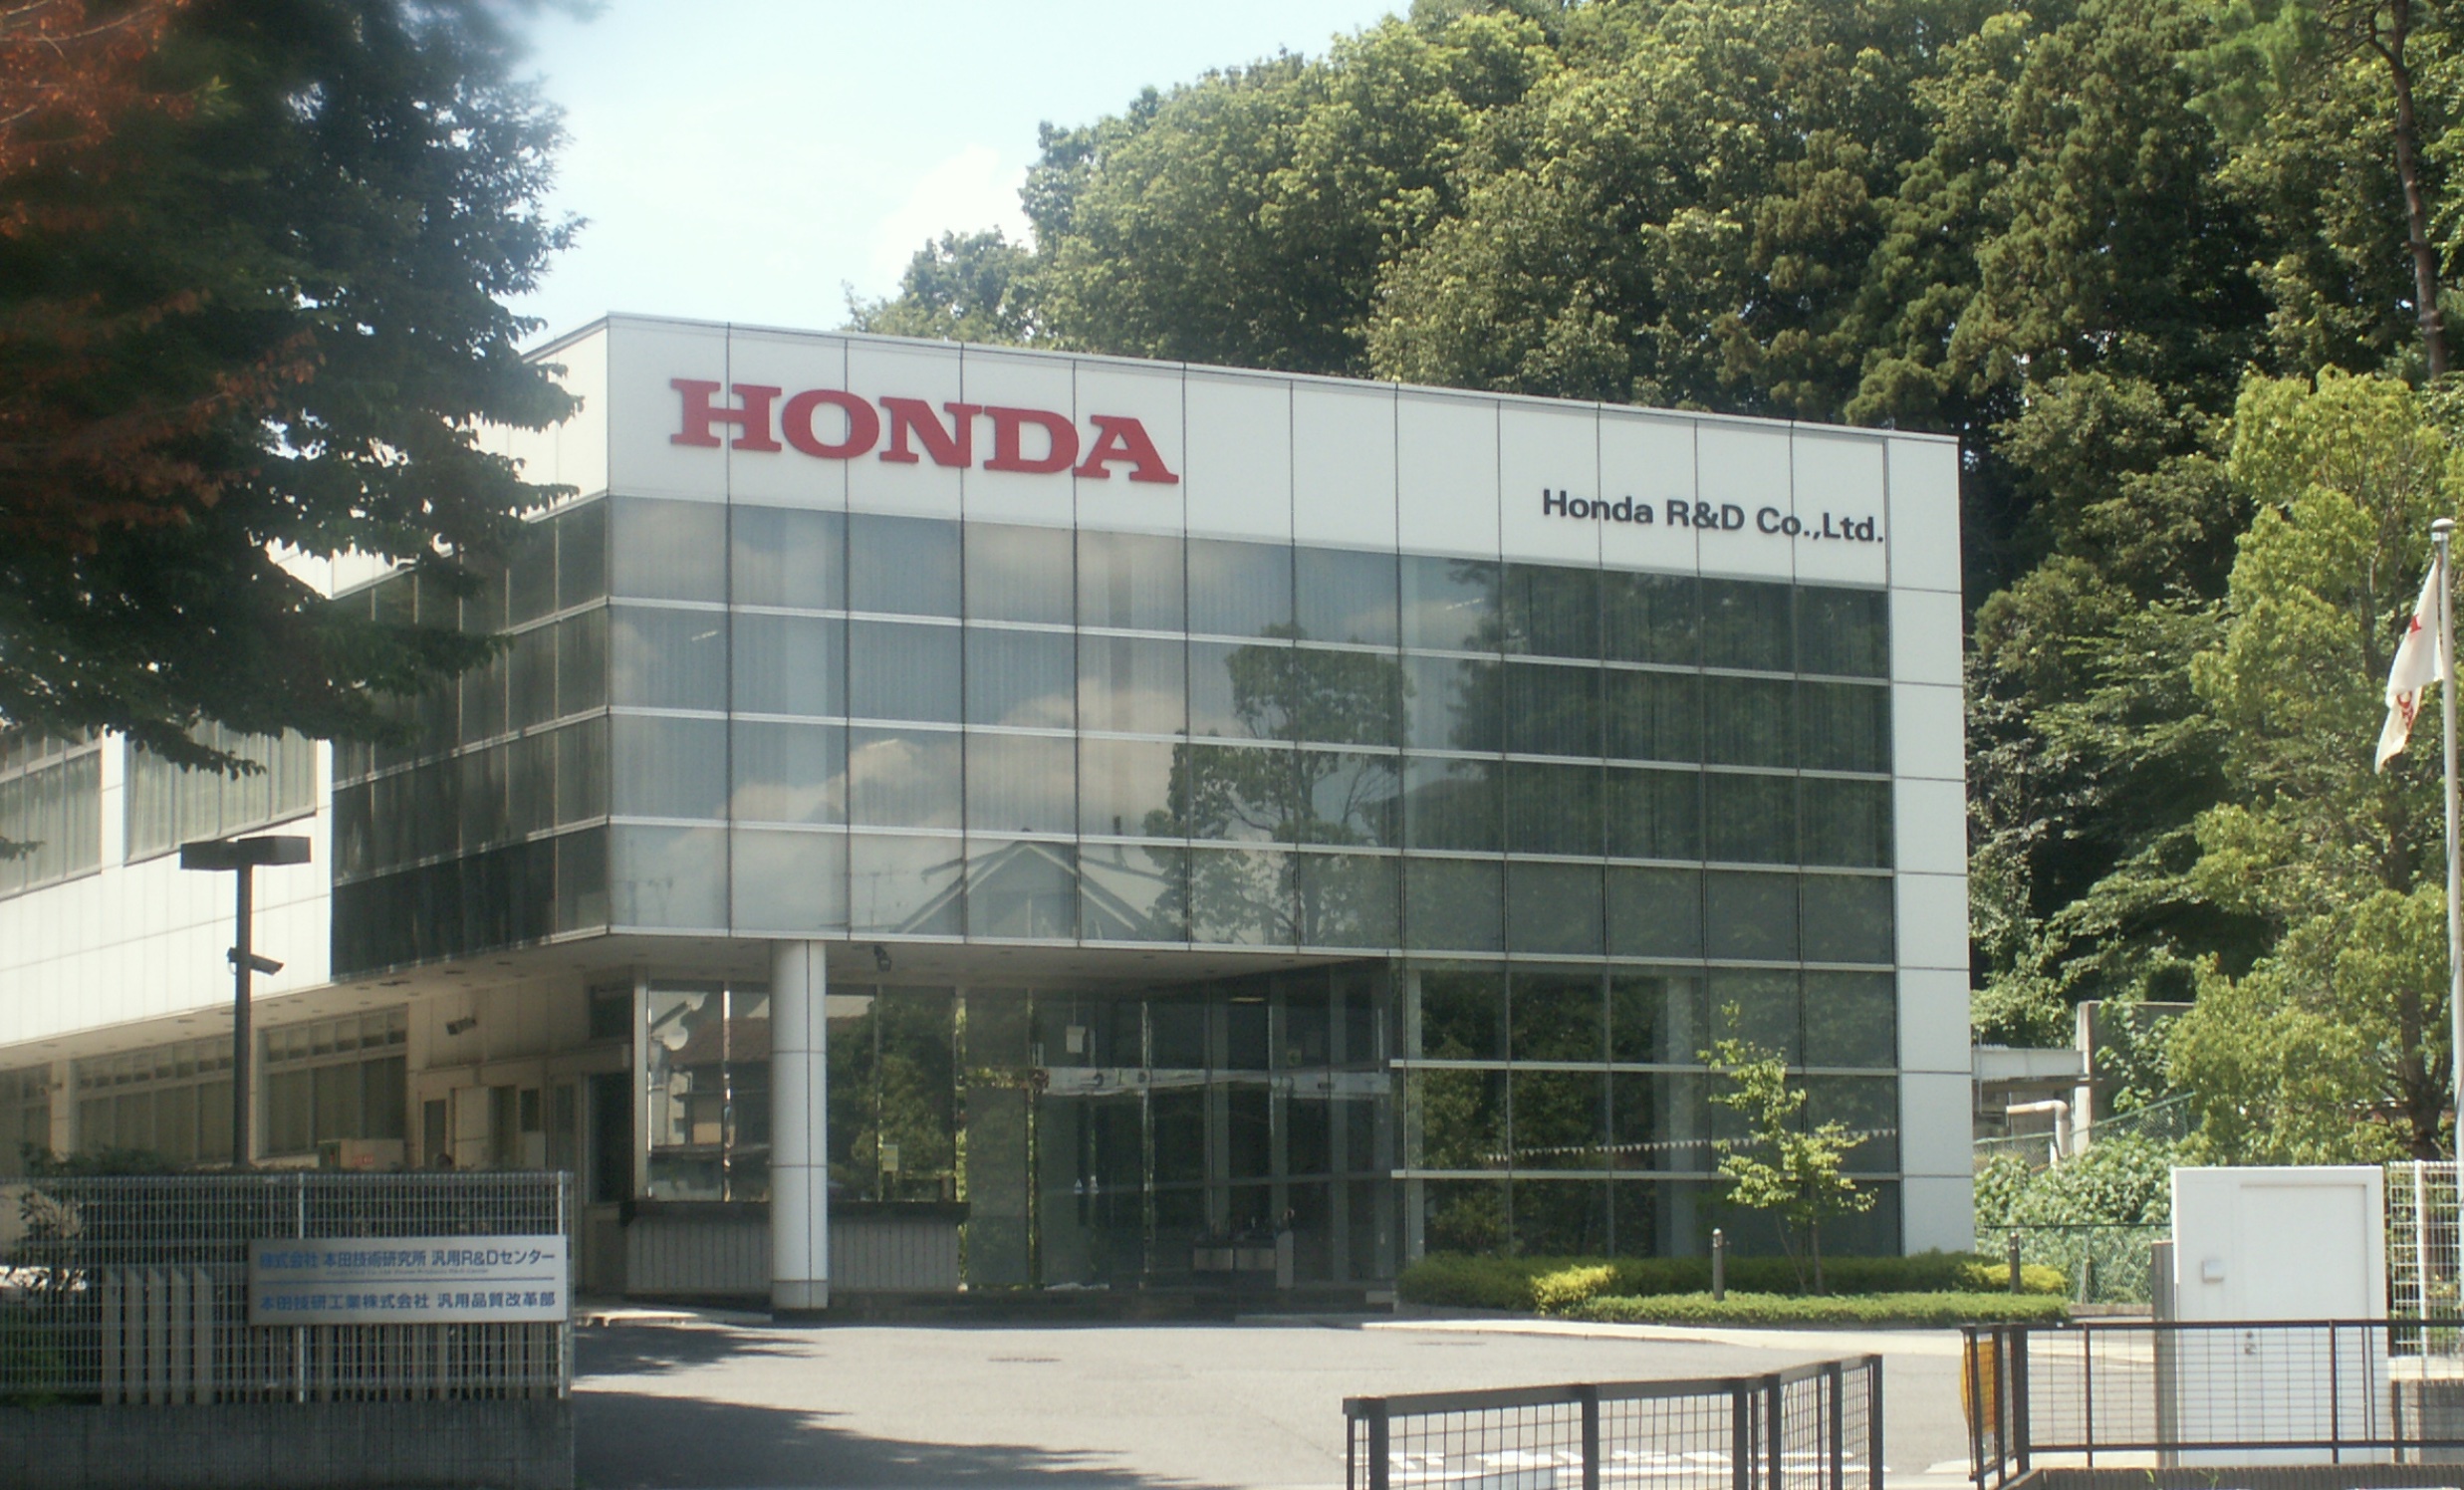 Honda electric vehicles & motorcycles sales